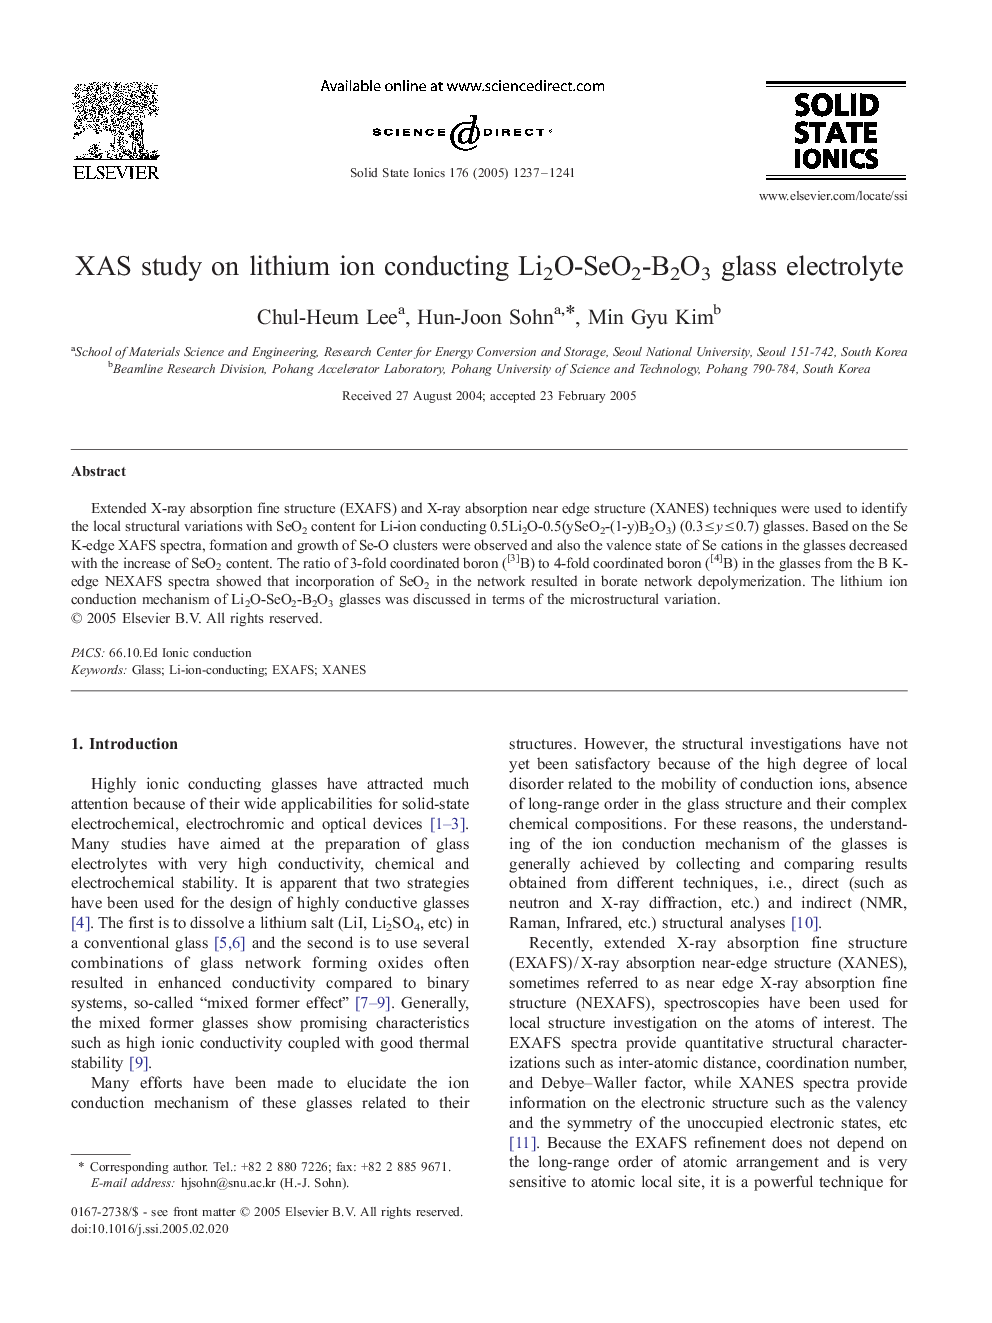 XAS study on lithium ion conducting Li2O-SeO2-B2O3 glass electrolyte